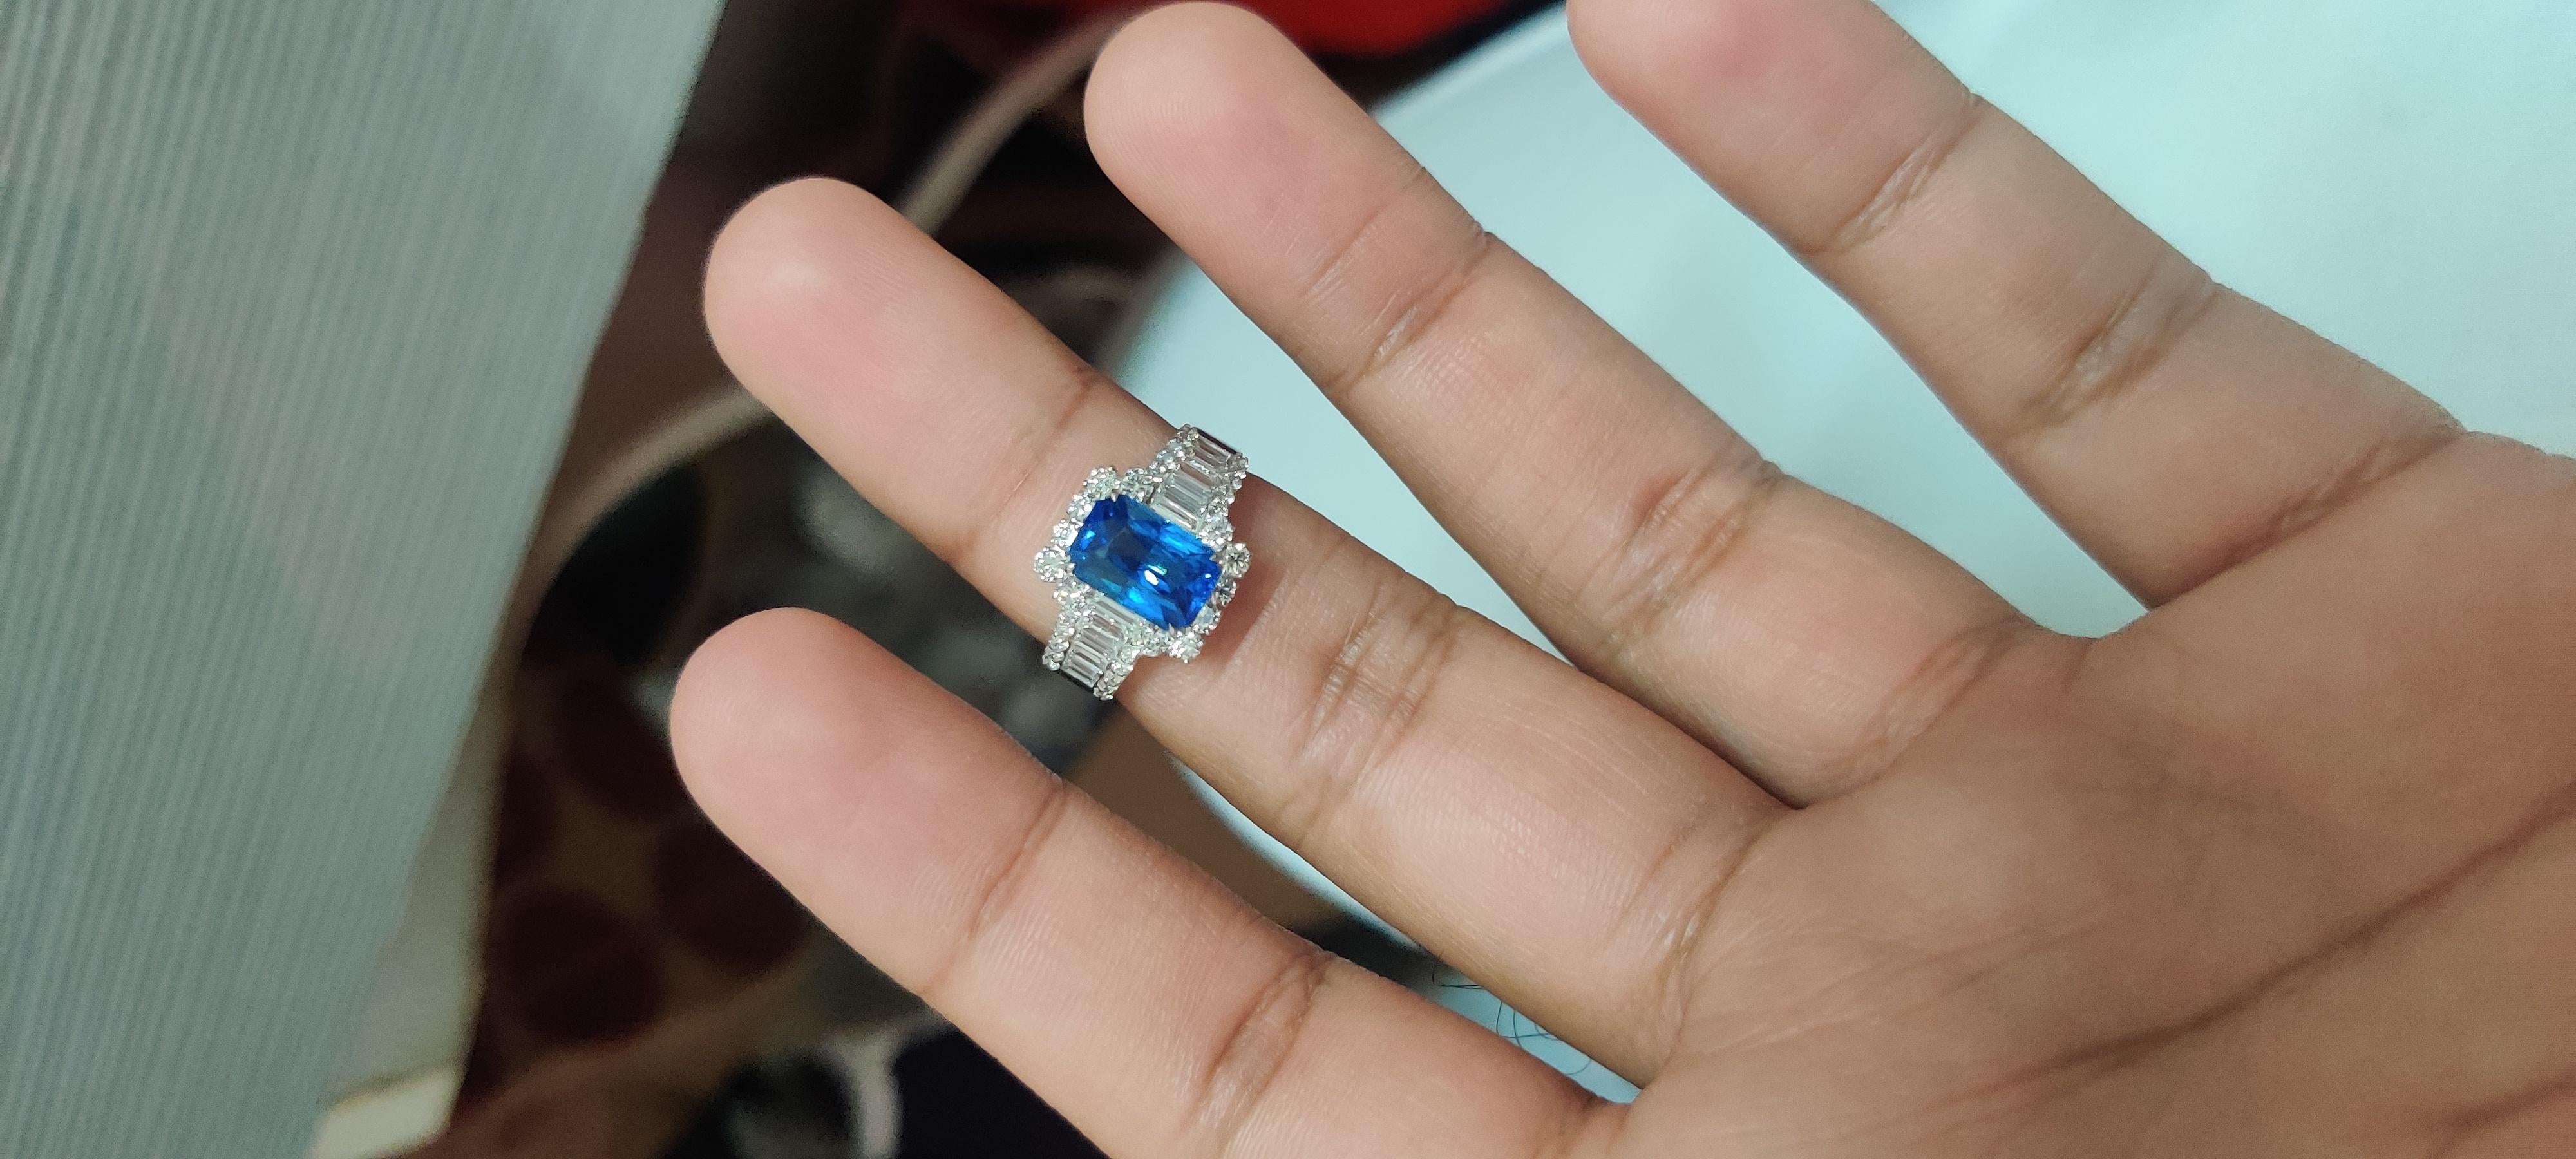 2.87 Carat Ceylon Blue Sapphire Diamond Cocktail Ring For Sale 3